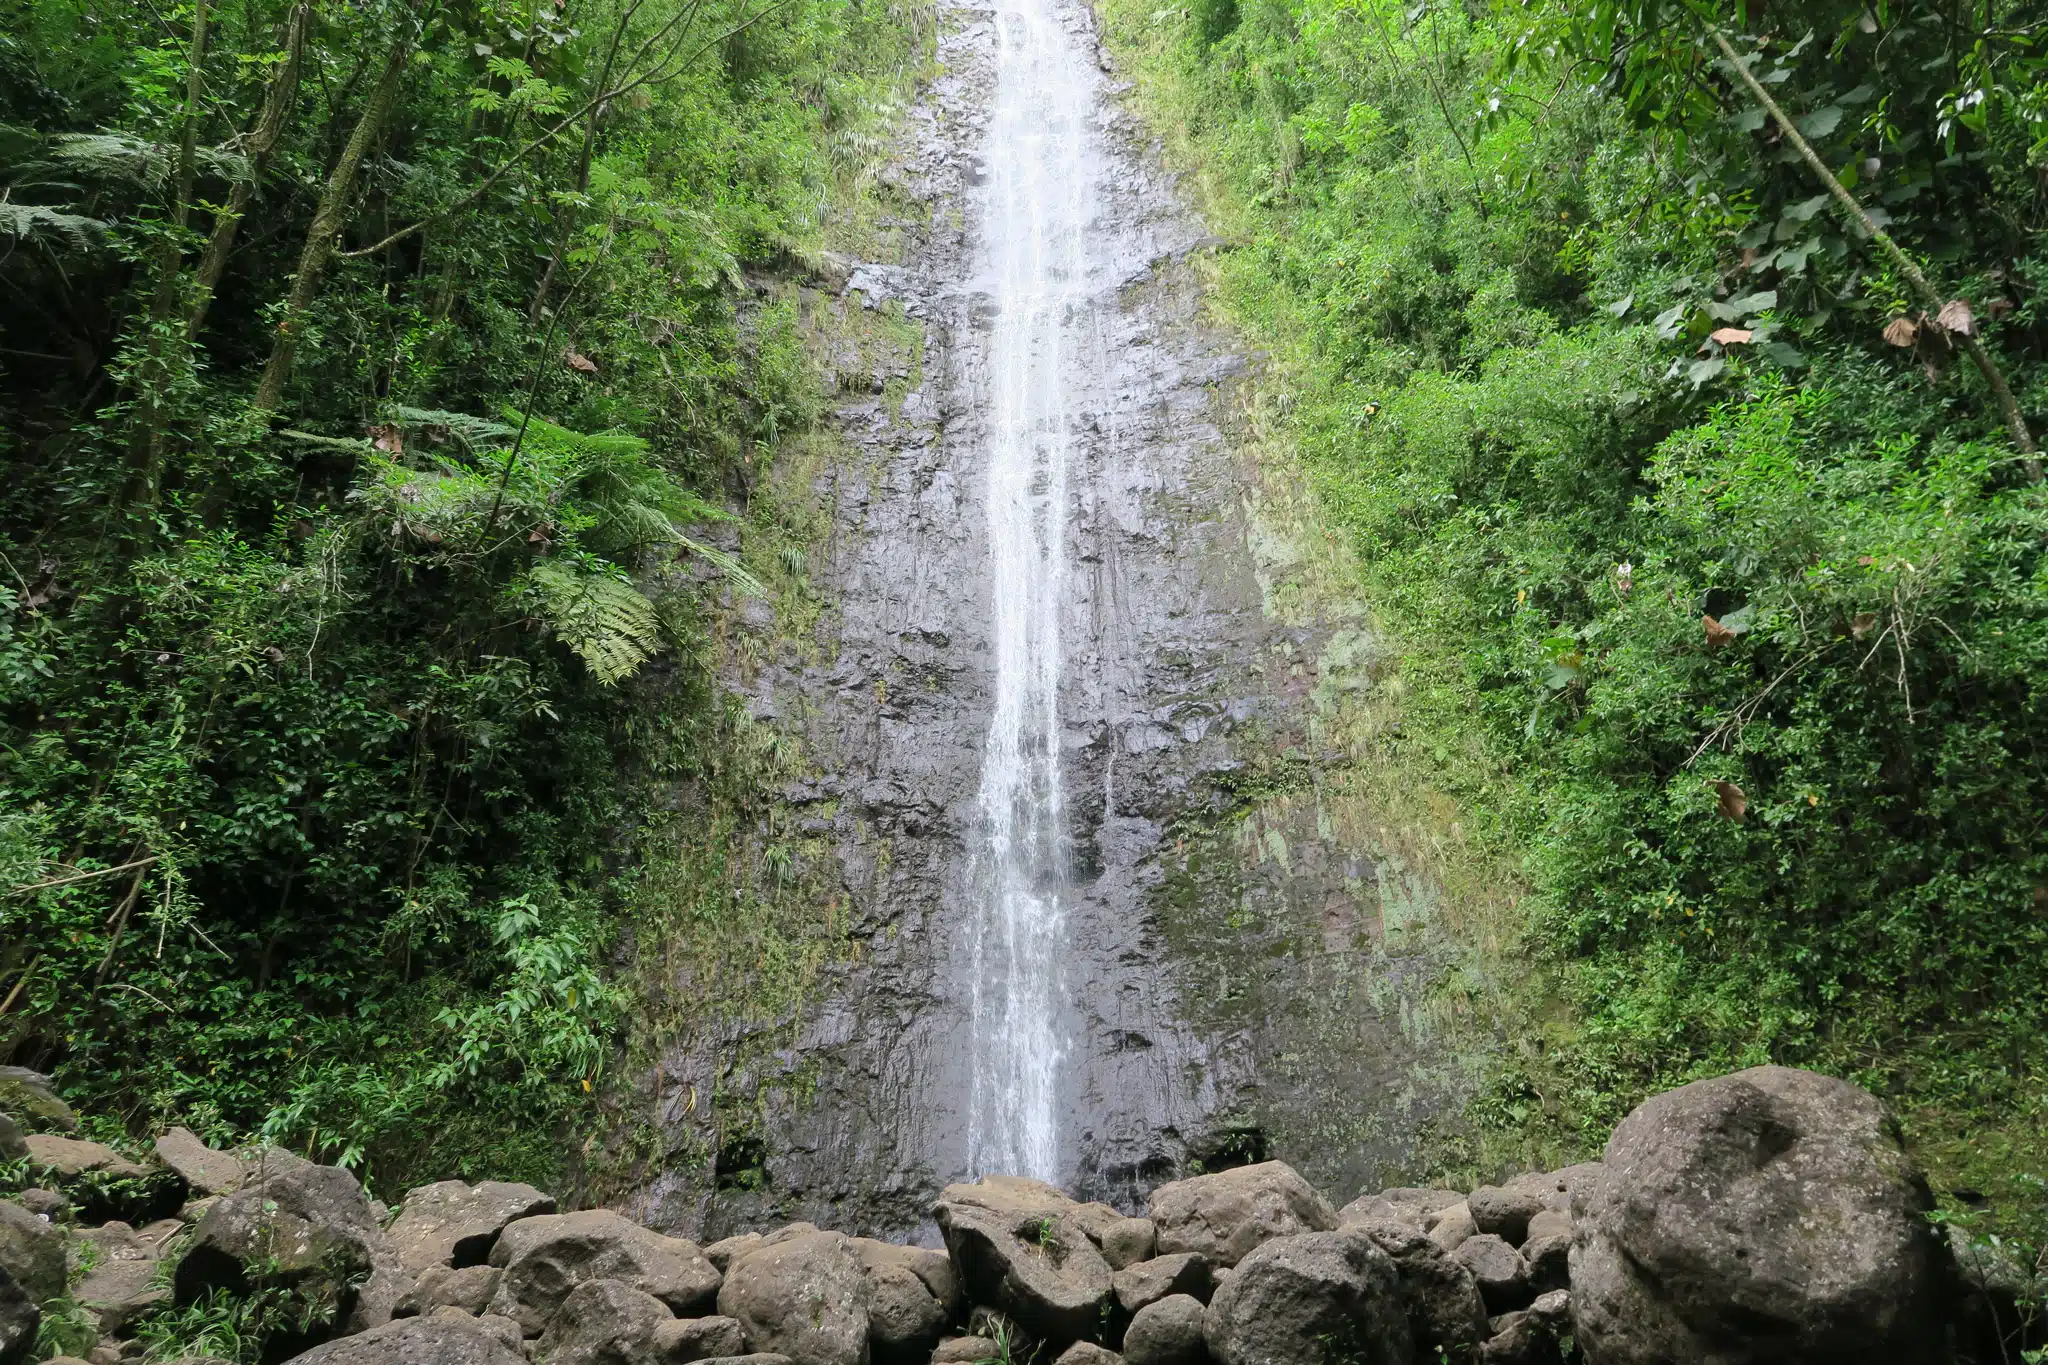 Manoa Falls Trail is a Hiking Trail located in the city of Honolulu on Oahu, Hawaii